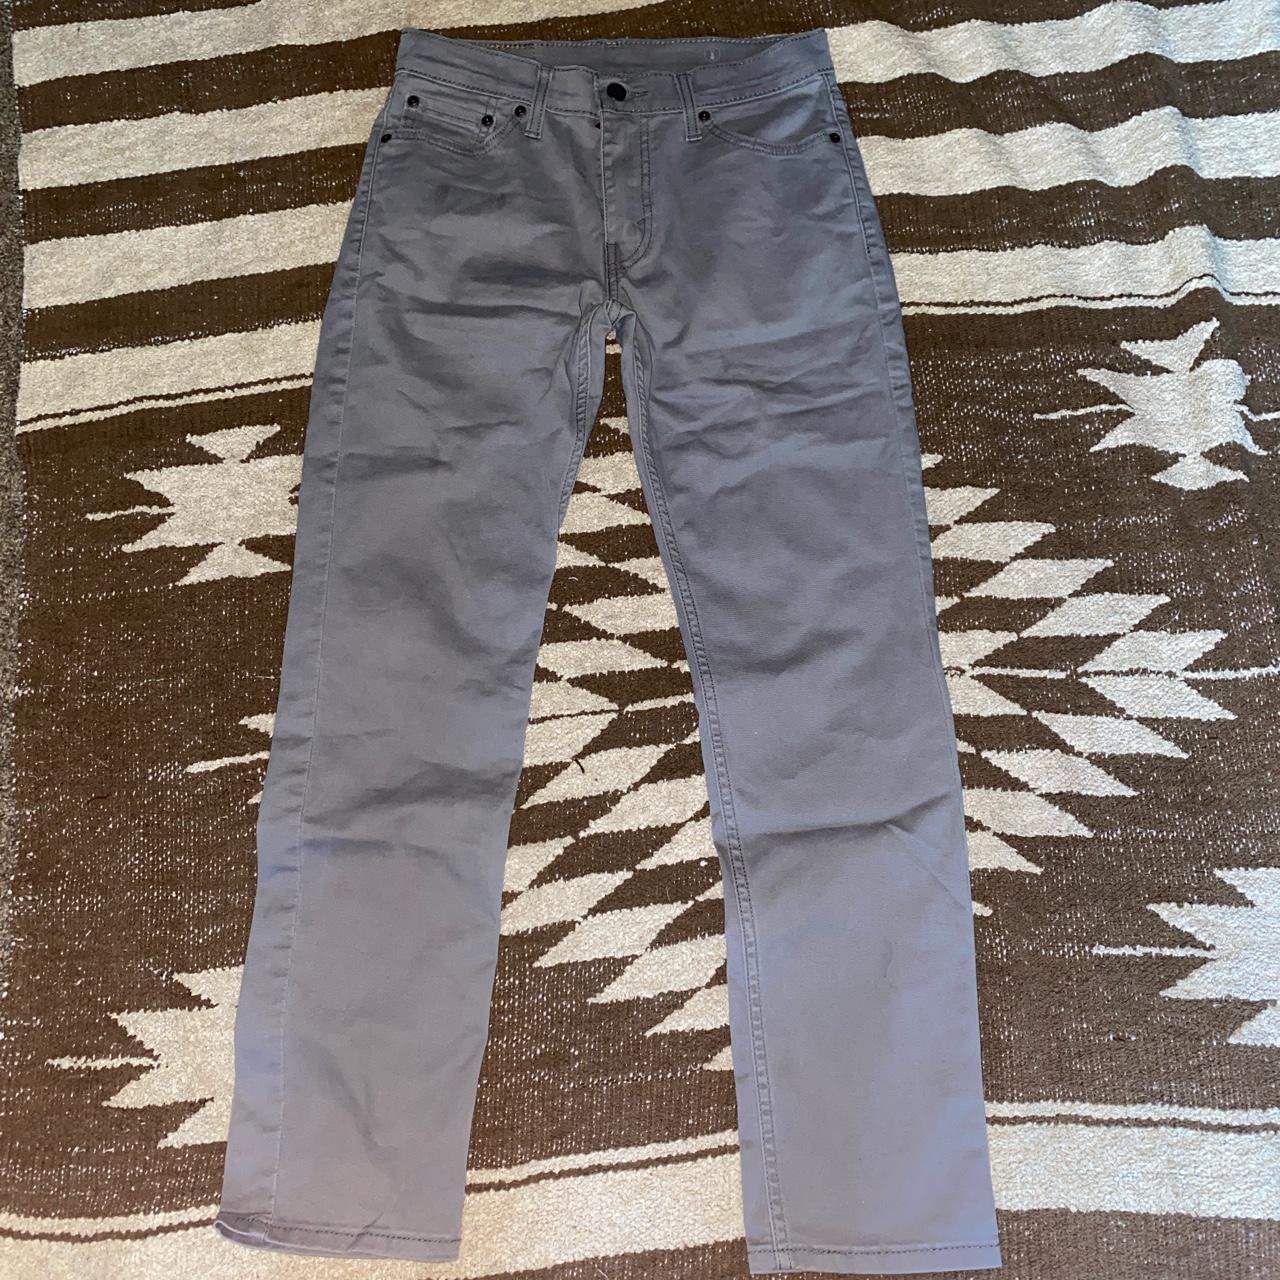 Grey Levi Pants 29x30 - Depop